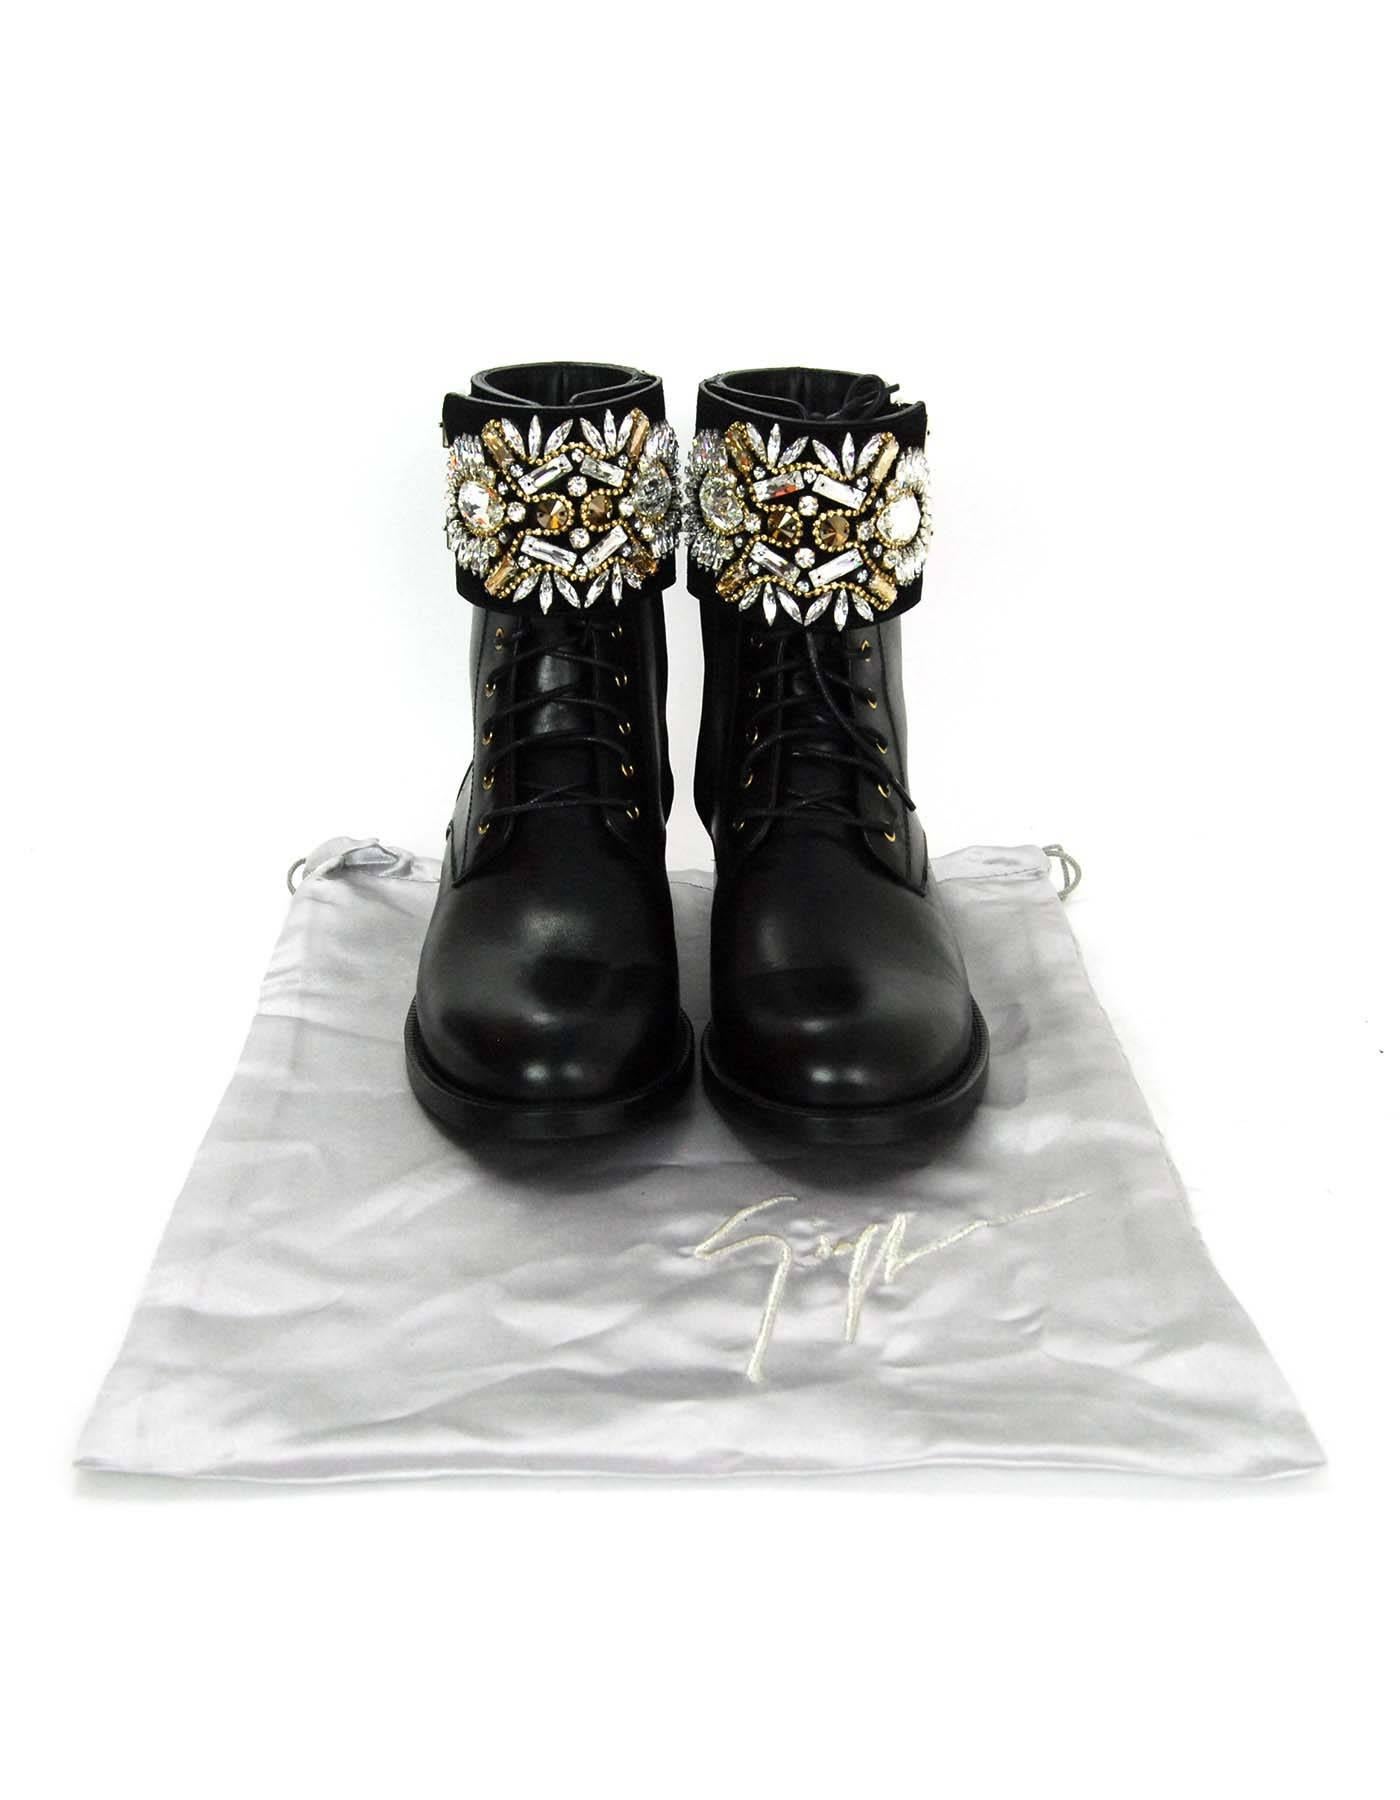 Rene Caovilla Black Leather and Jeweled Combat Boots Sz 38 1